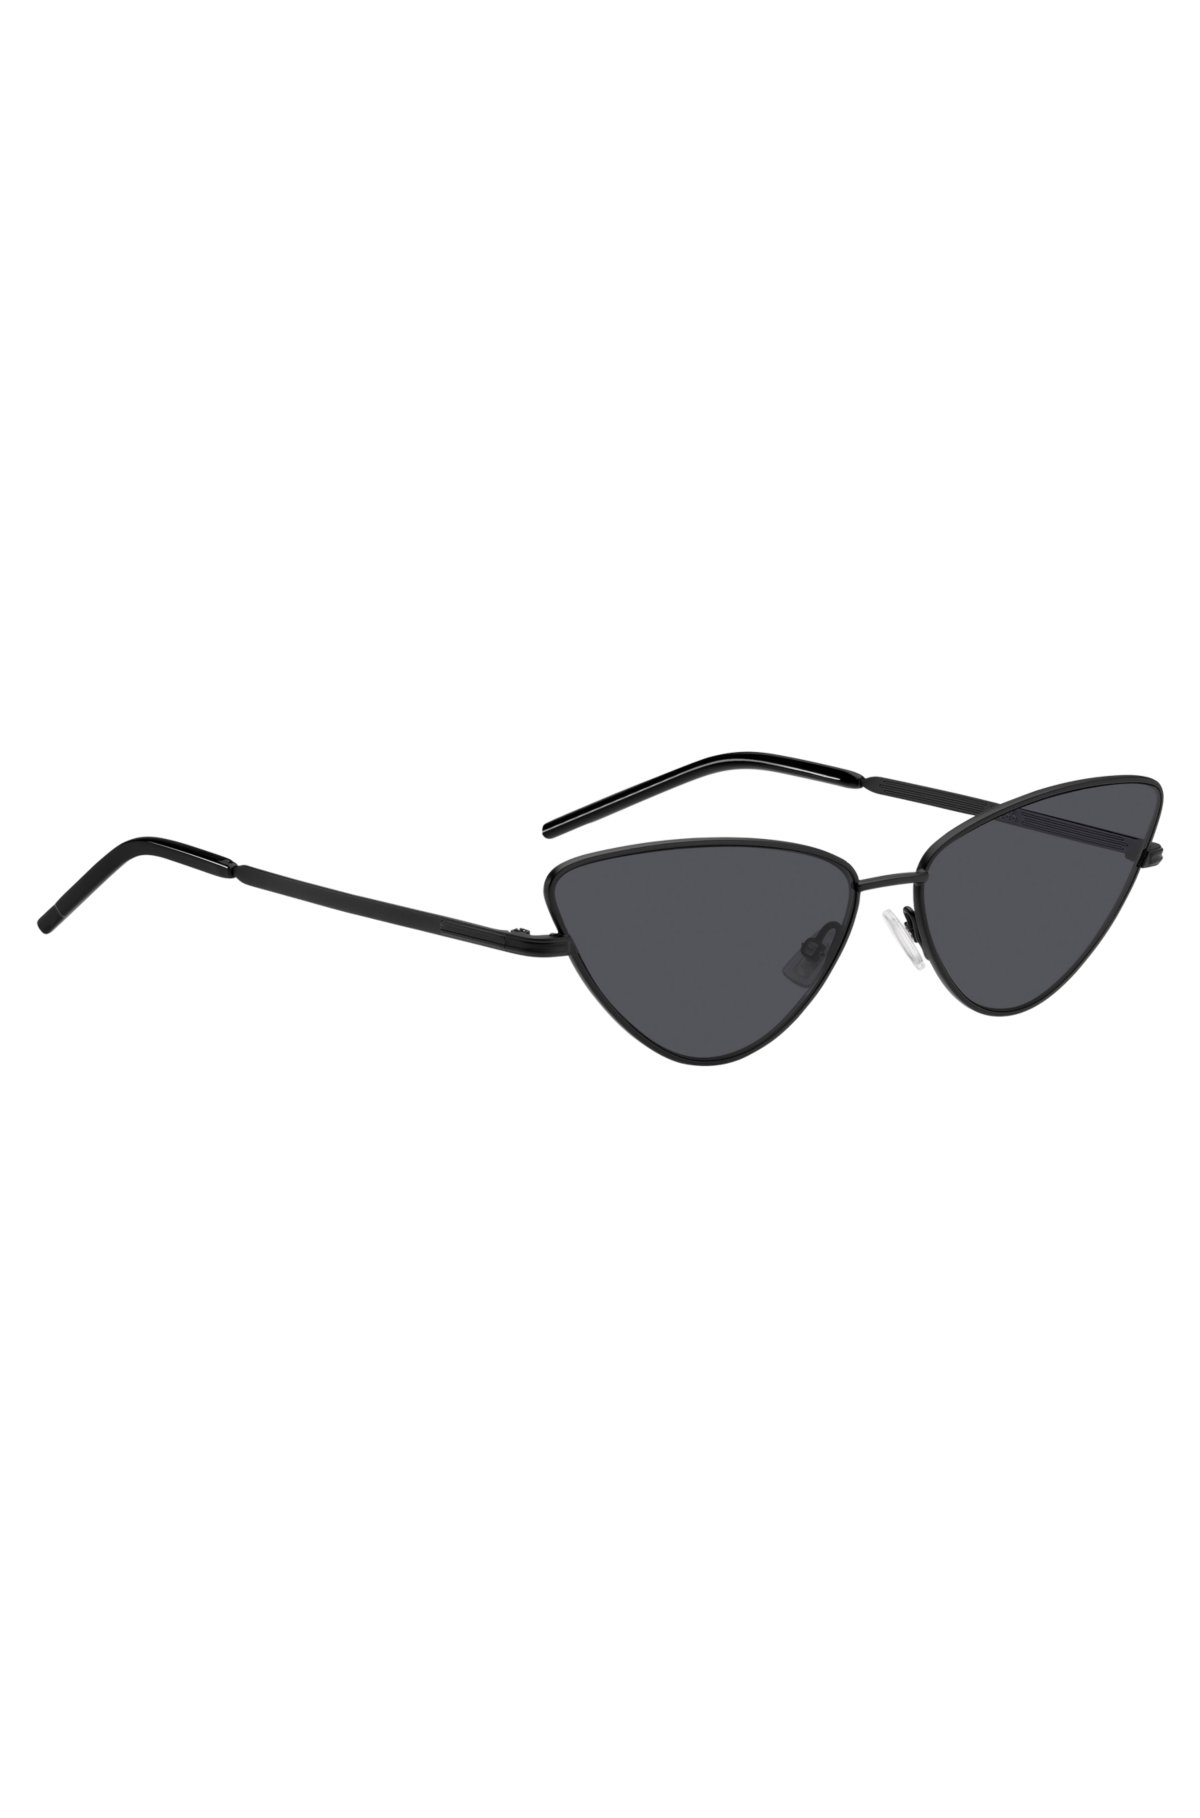 Cat-eye sunglasses in black steel with signature detailing, Black